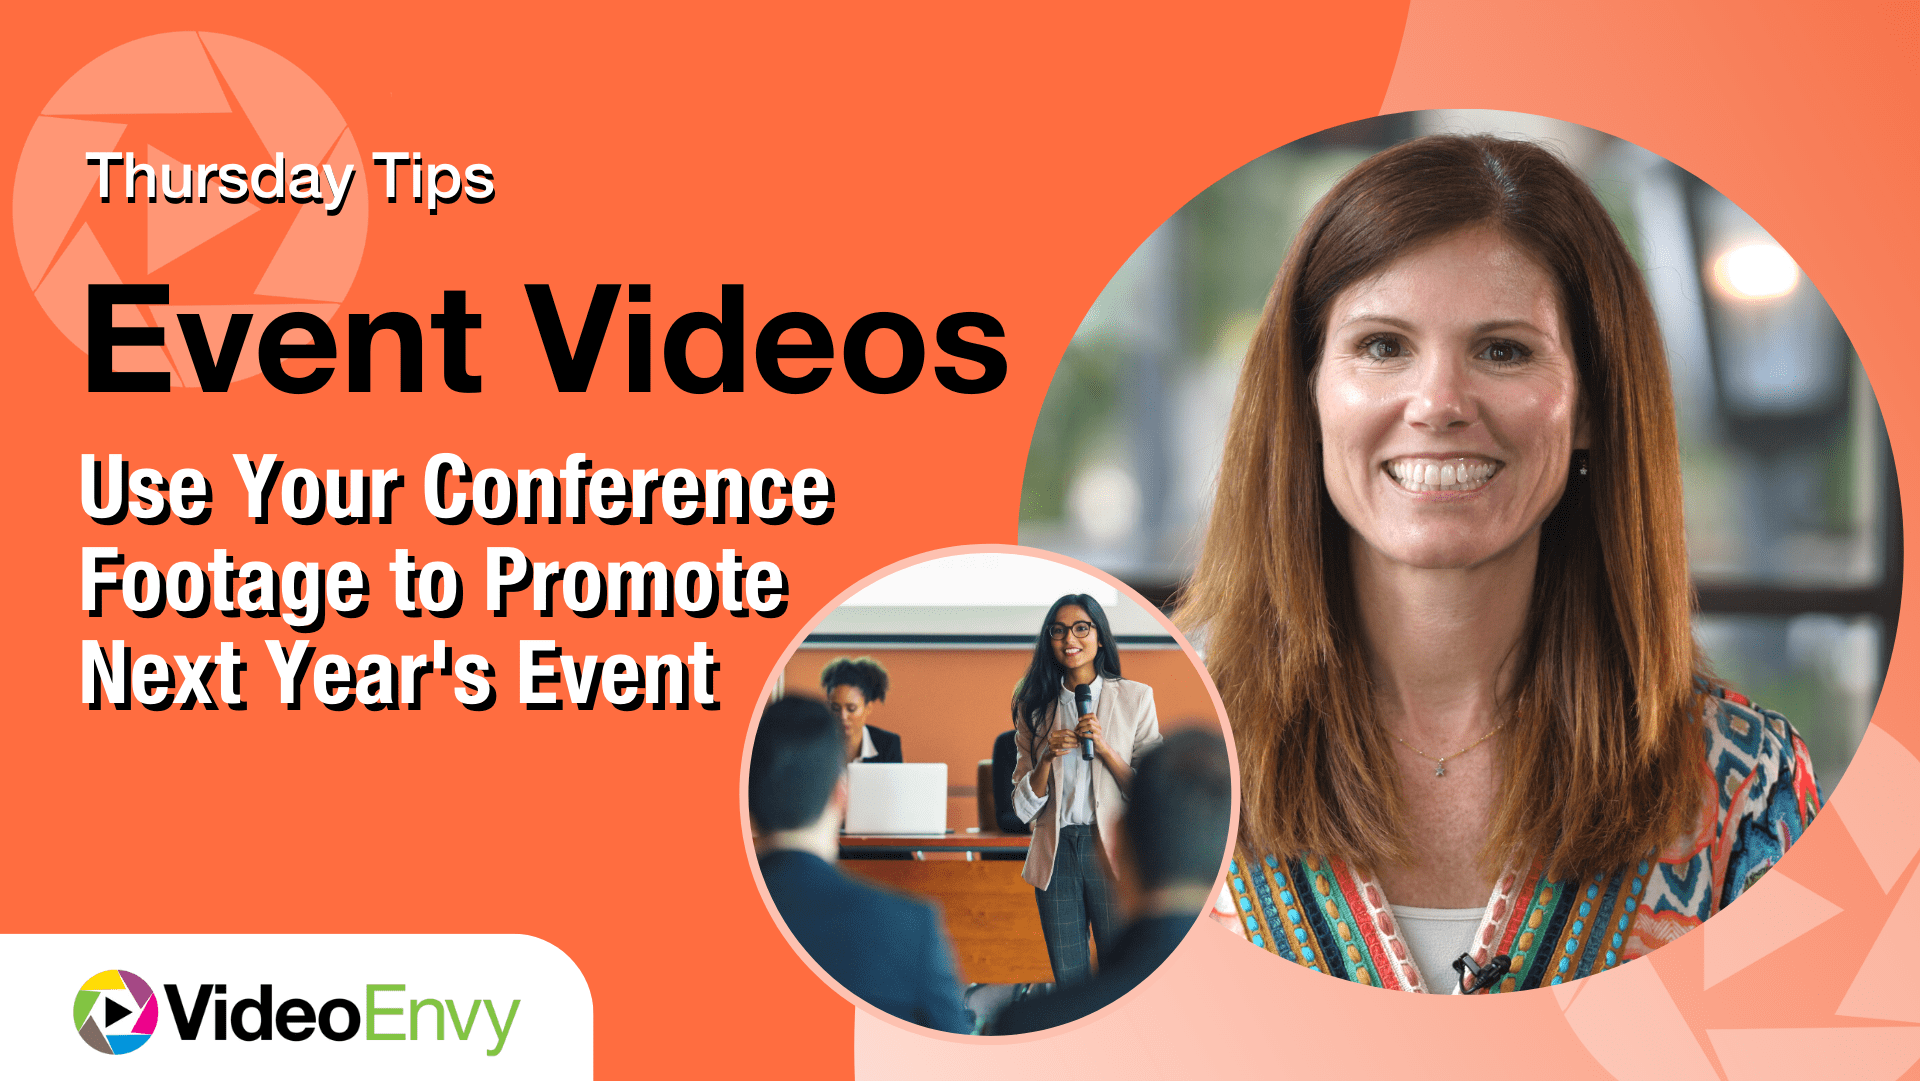 Thursday Tips: Event Videos